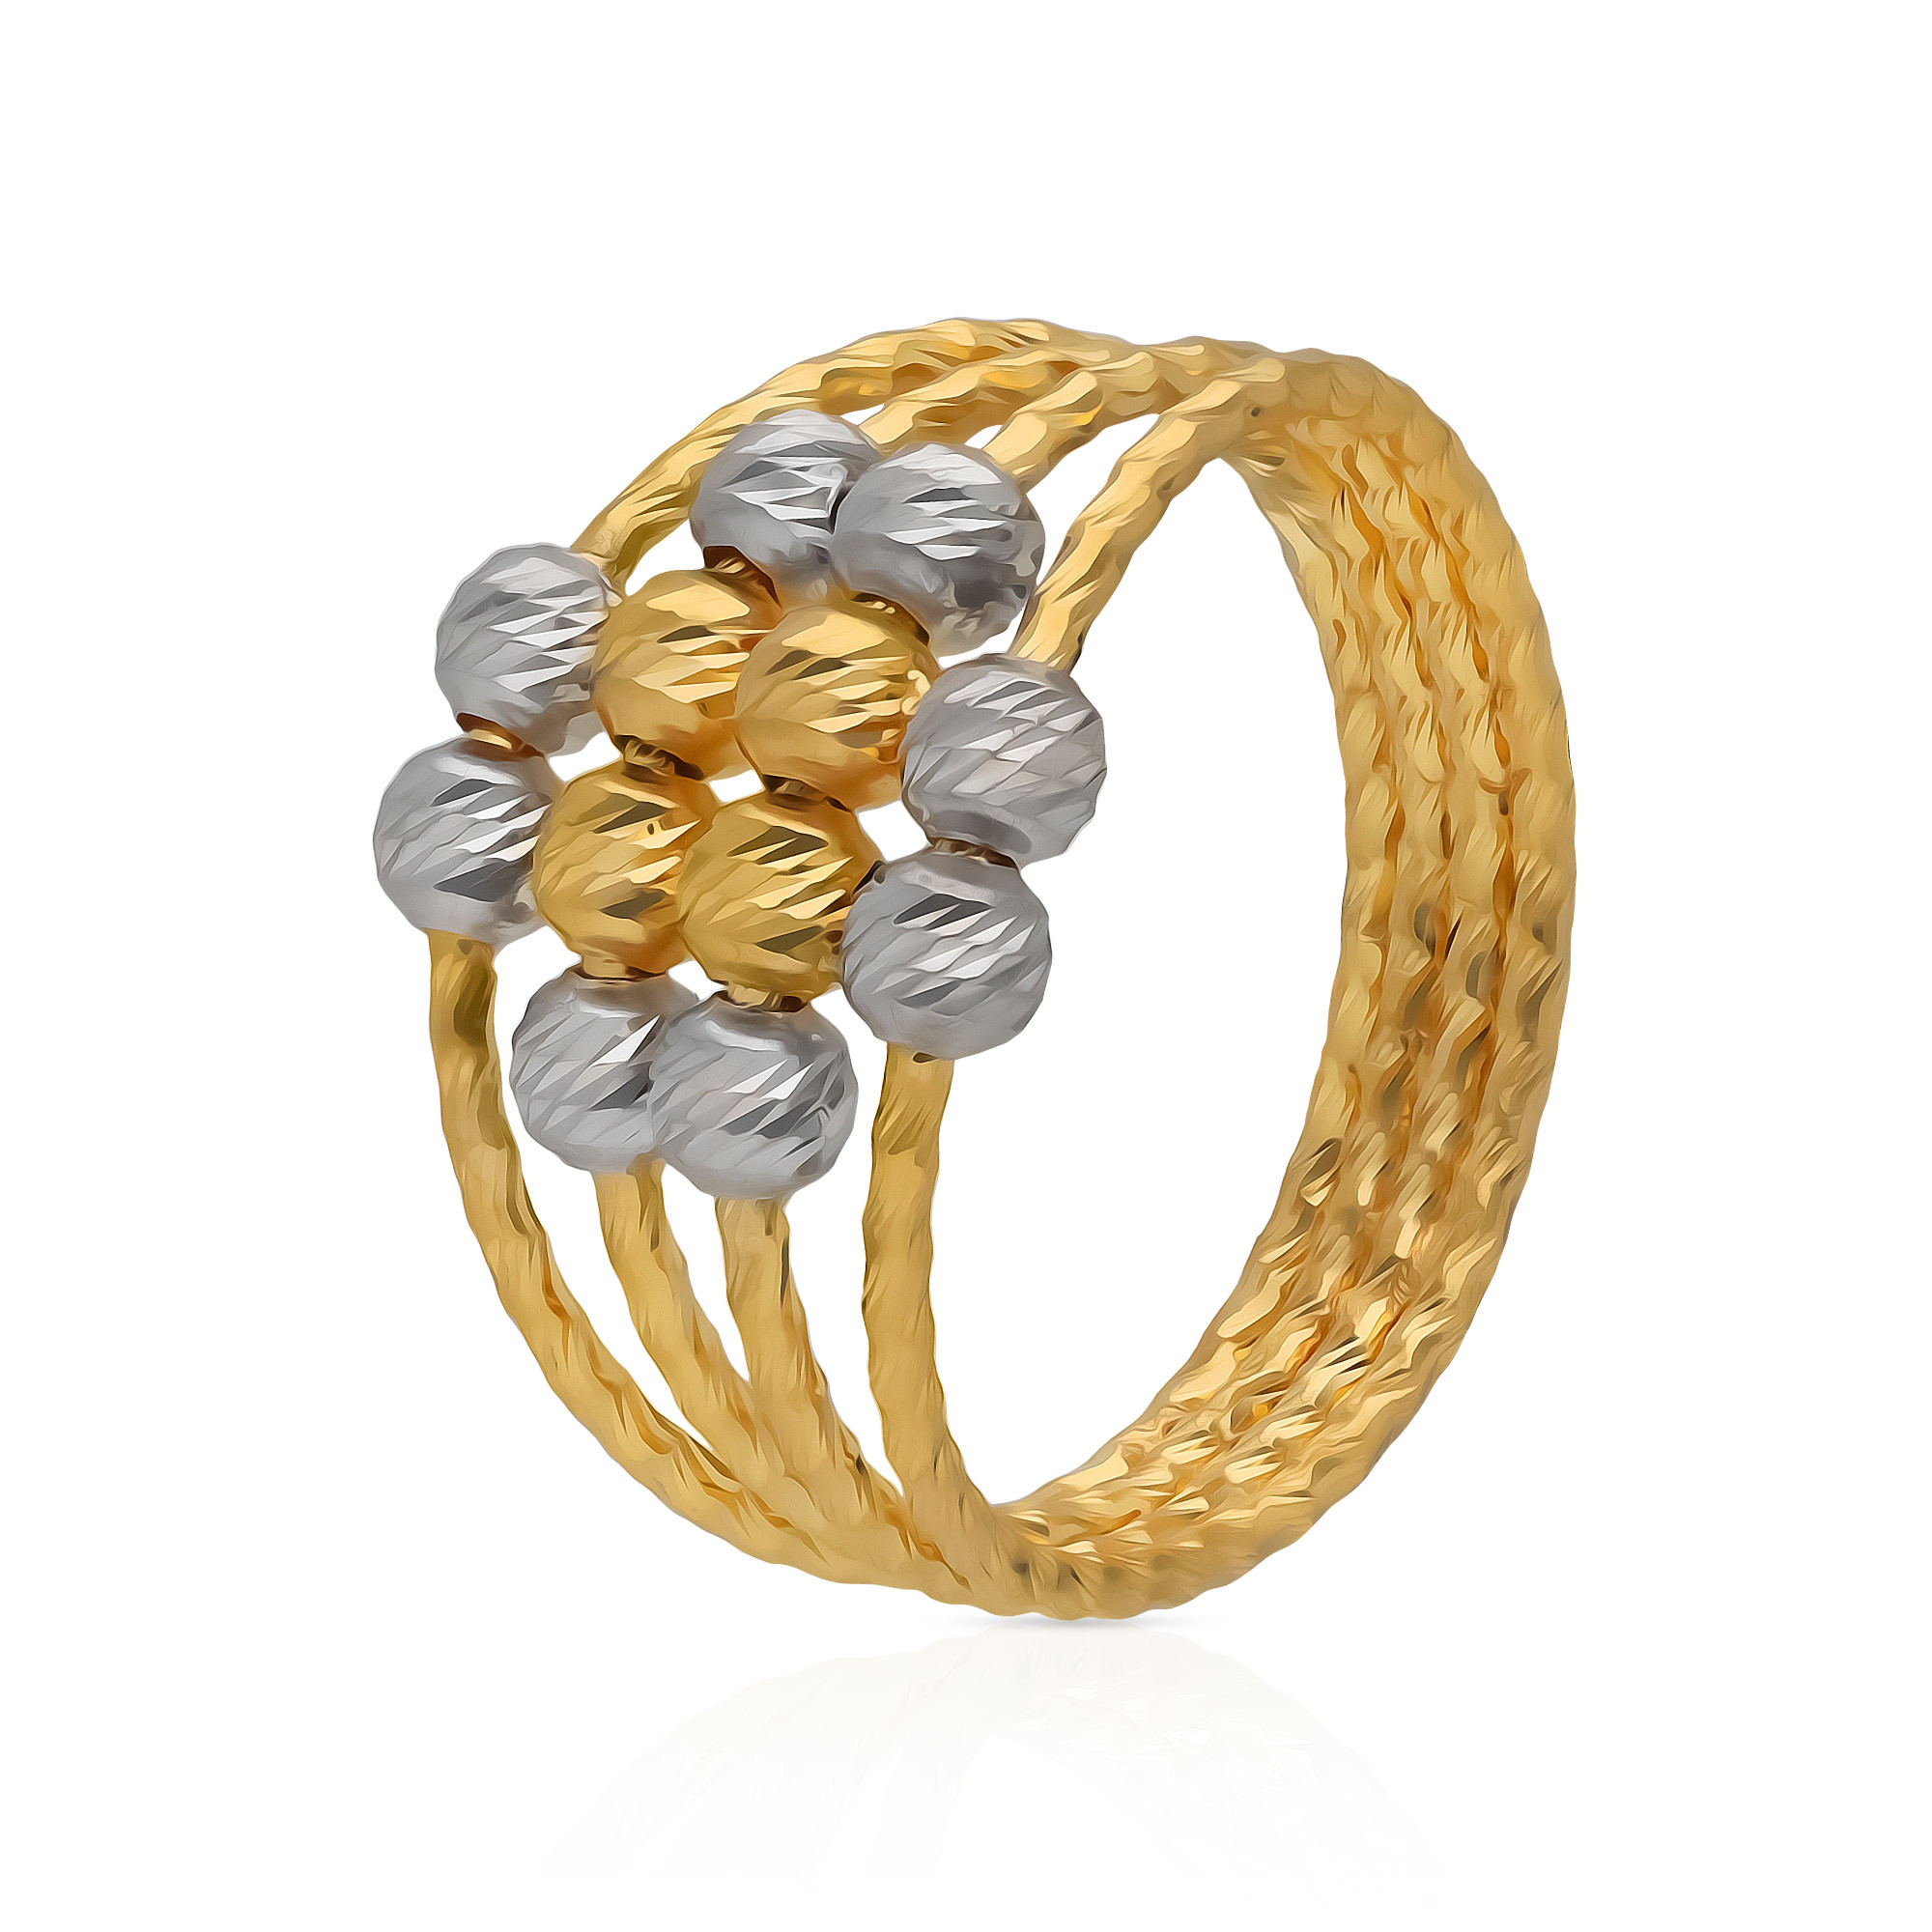 Buy Malabar Gold Ring RG1186981 for Women Online | Malabar Gold & Diamonds